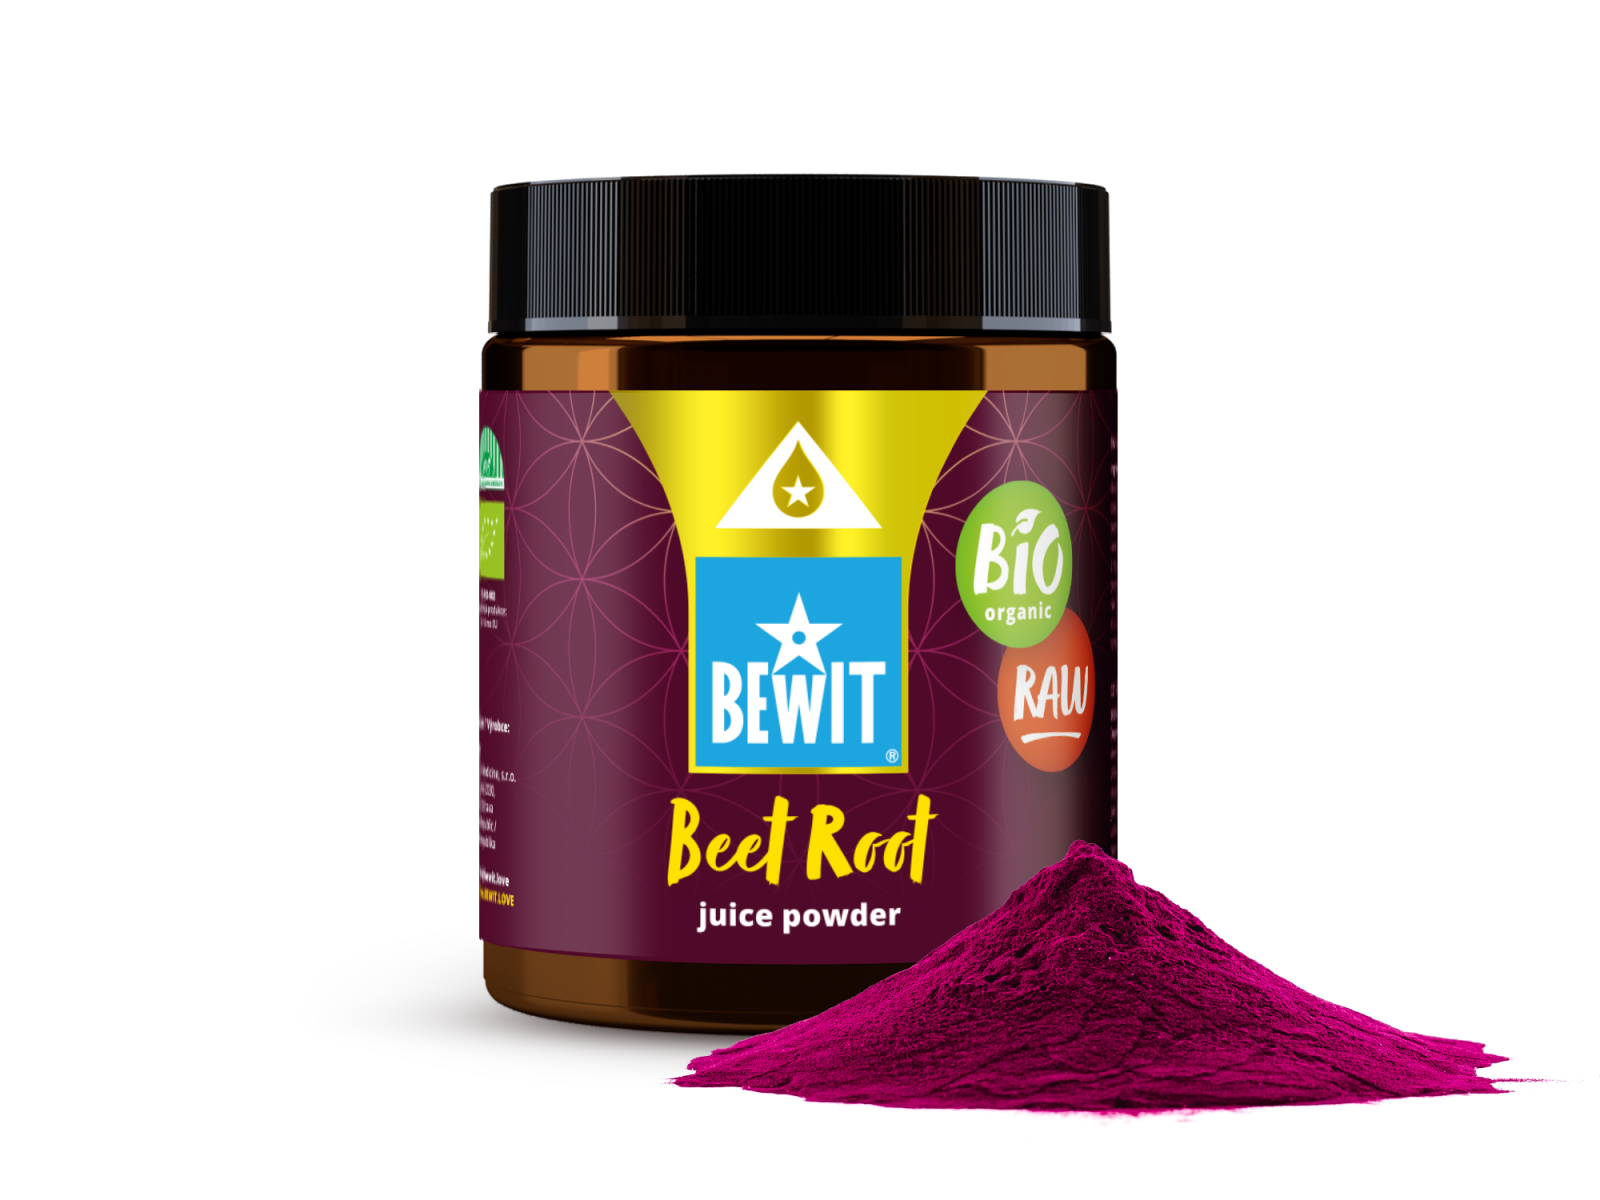 BEWIT Organic beetroot RAW, juice powder - Food supplement